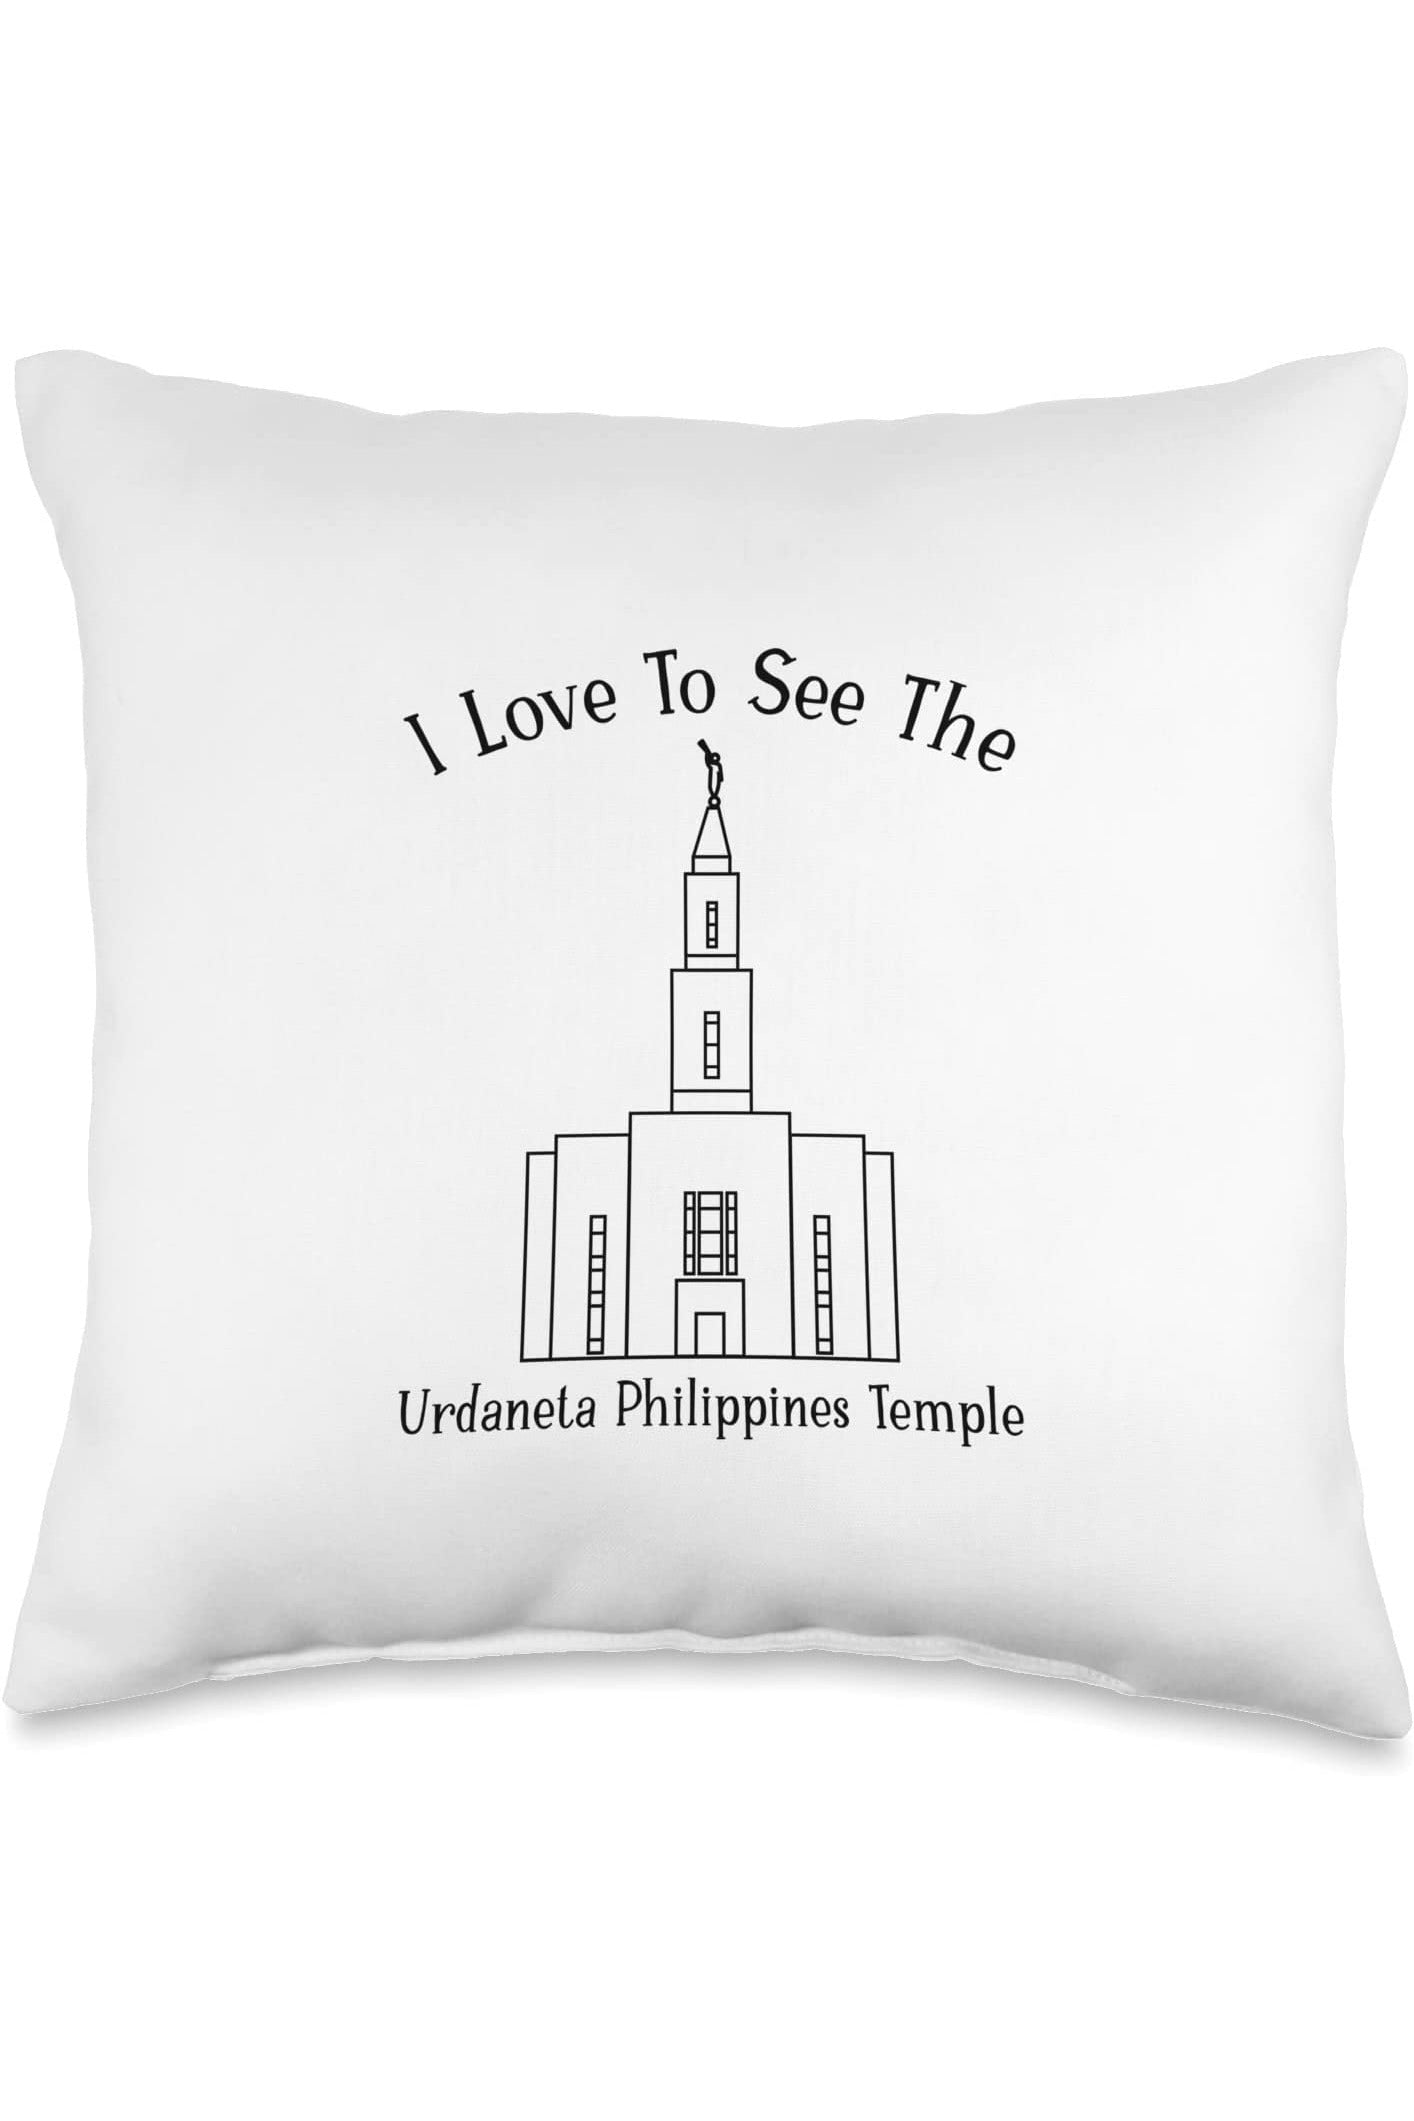 Urdaneta Philippines Temple Throw Pillows - Happy Style (English) US